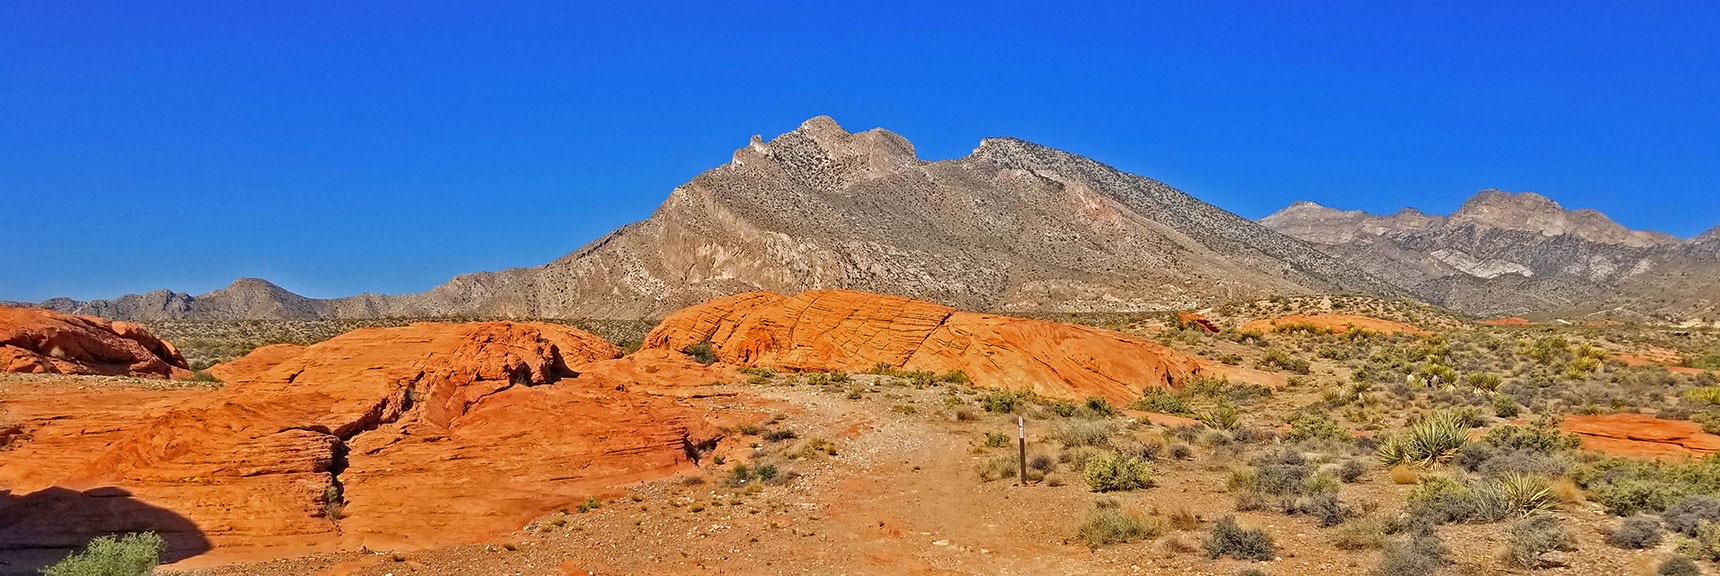 Continuing Toward the Base of Damsel Peak (Center) | Little Red Rock Las Vegas, Nevada, Near La Madre Mountains Wilderness